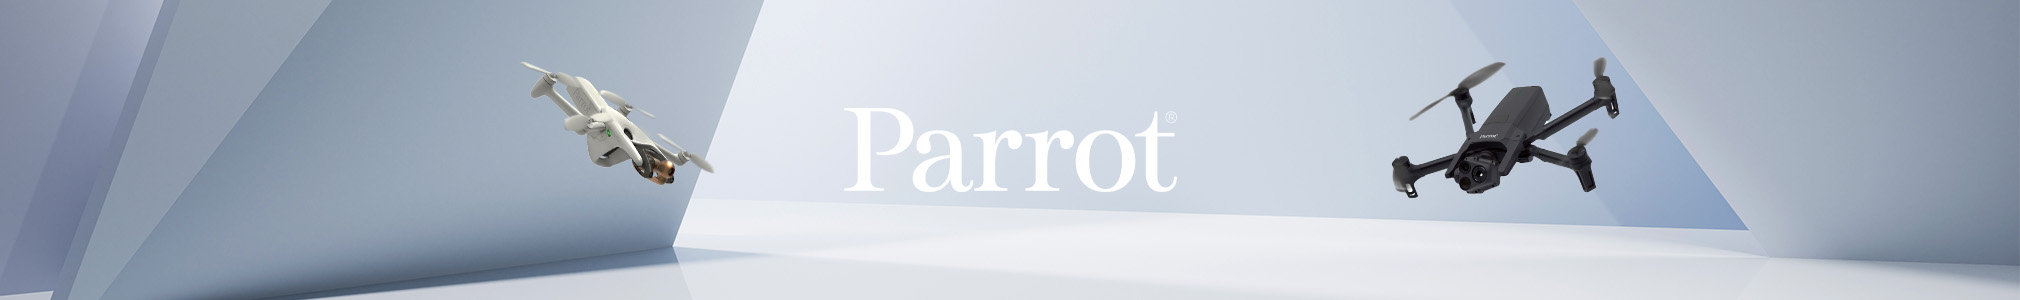 Parrot-Drohnen